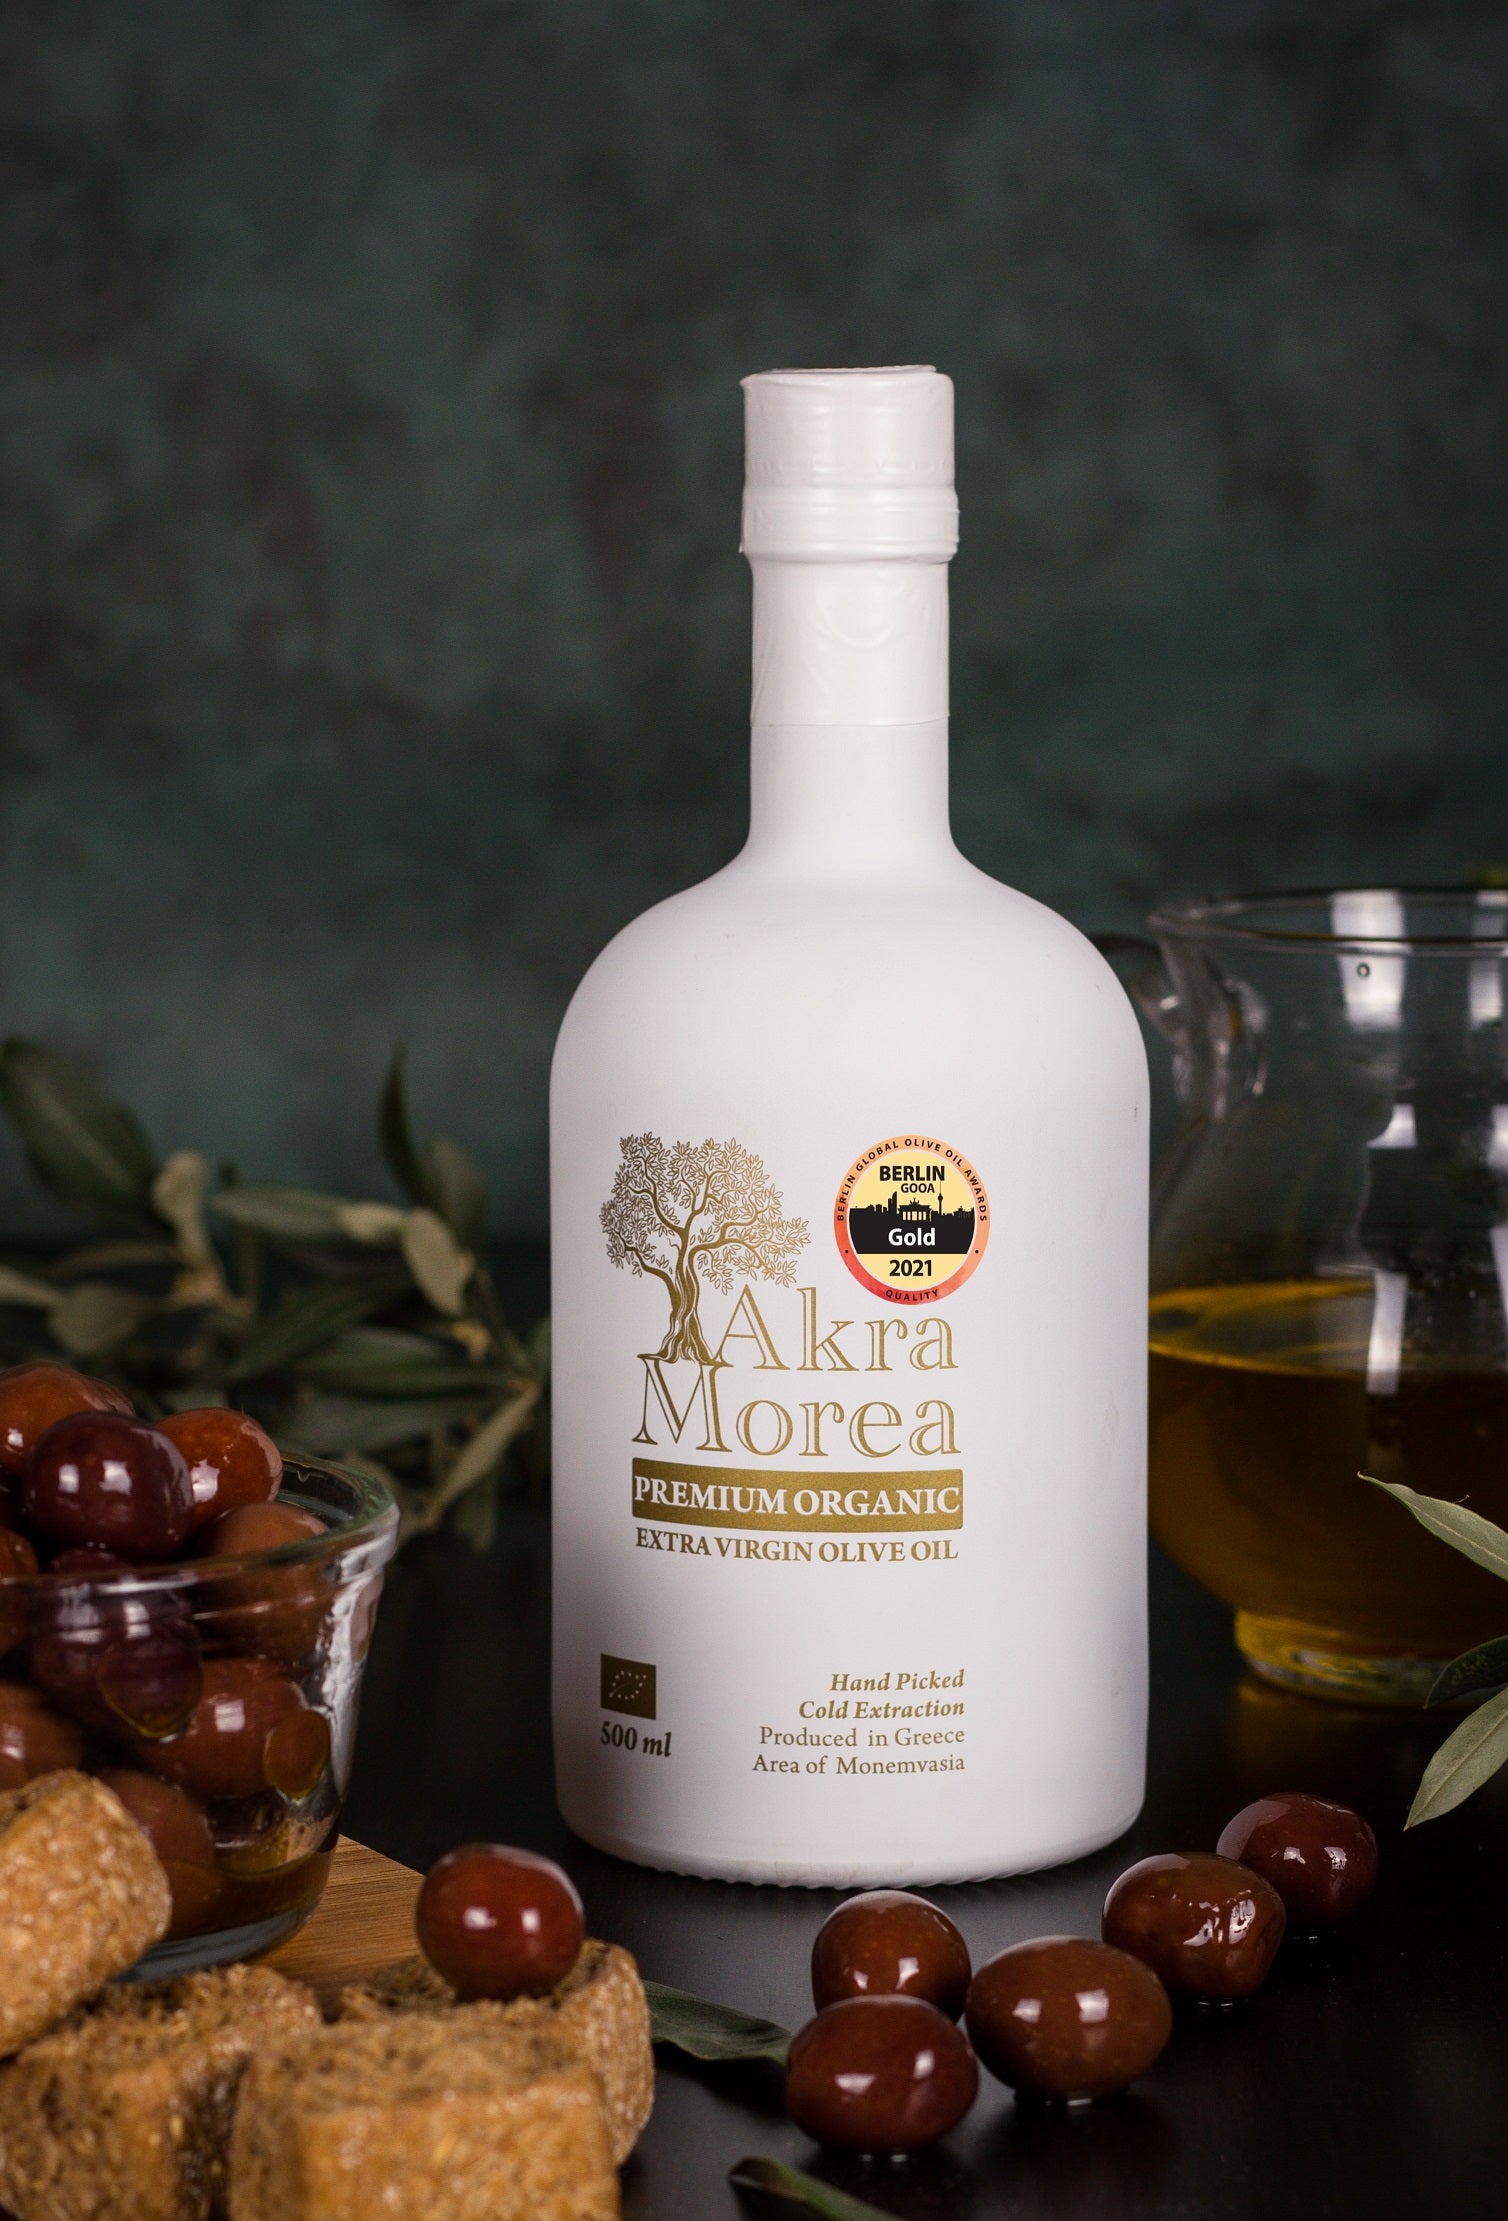 Premium Organic Extra Virgin Olive Oil 500ml - Akra Morea Olive Oil